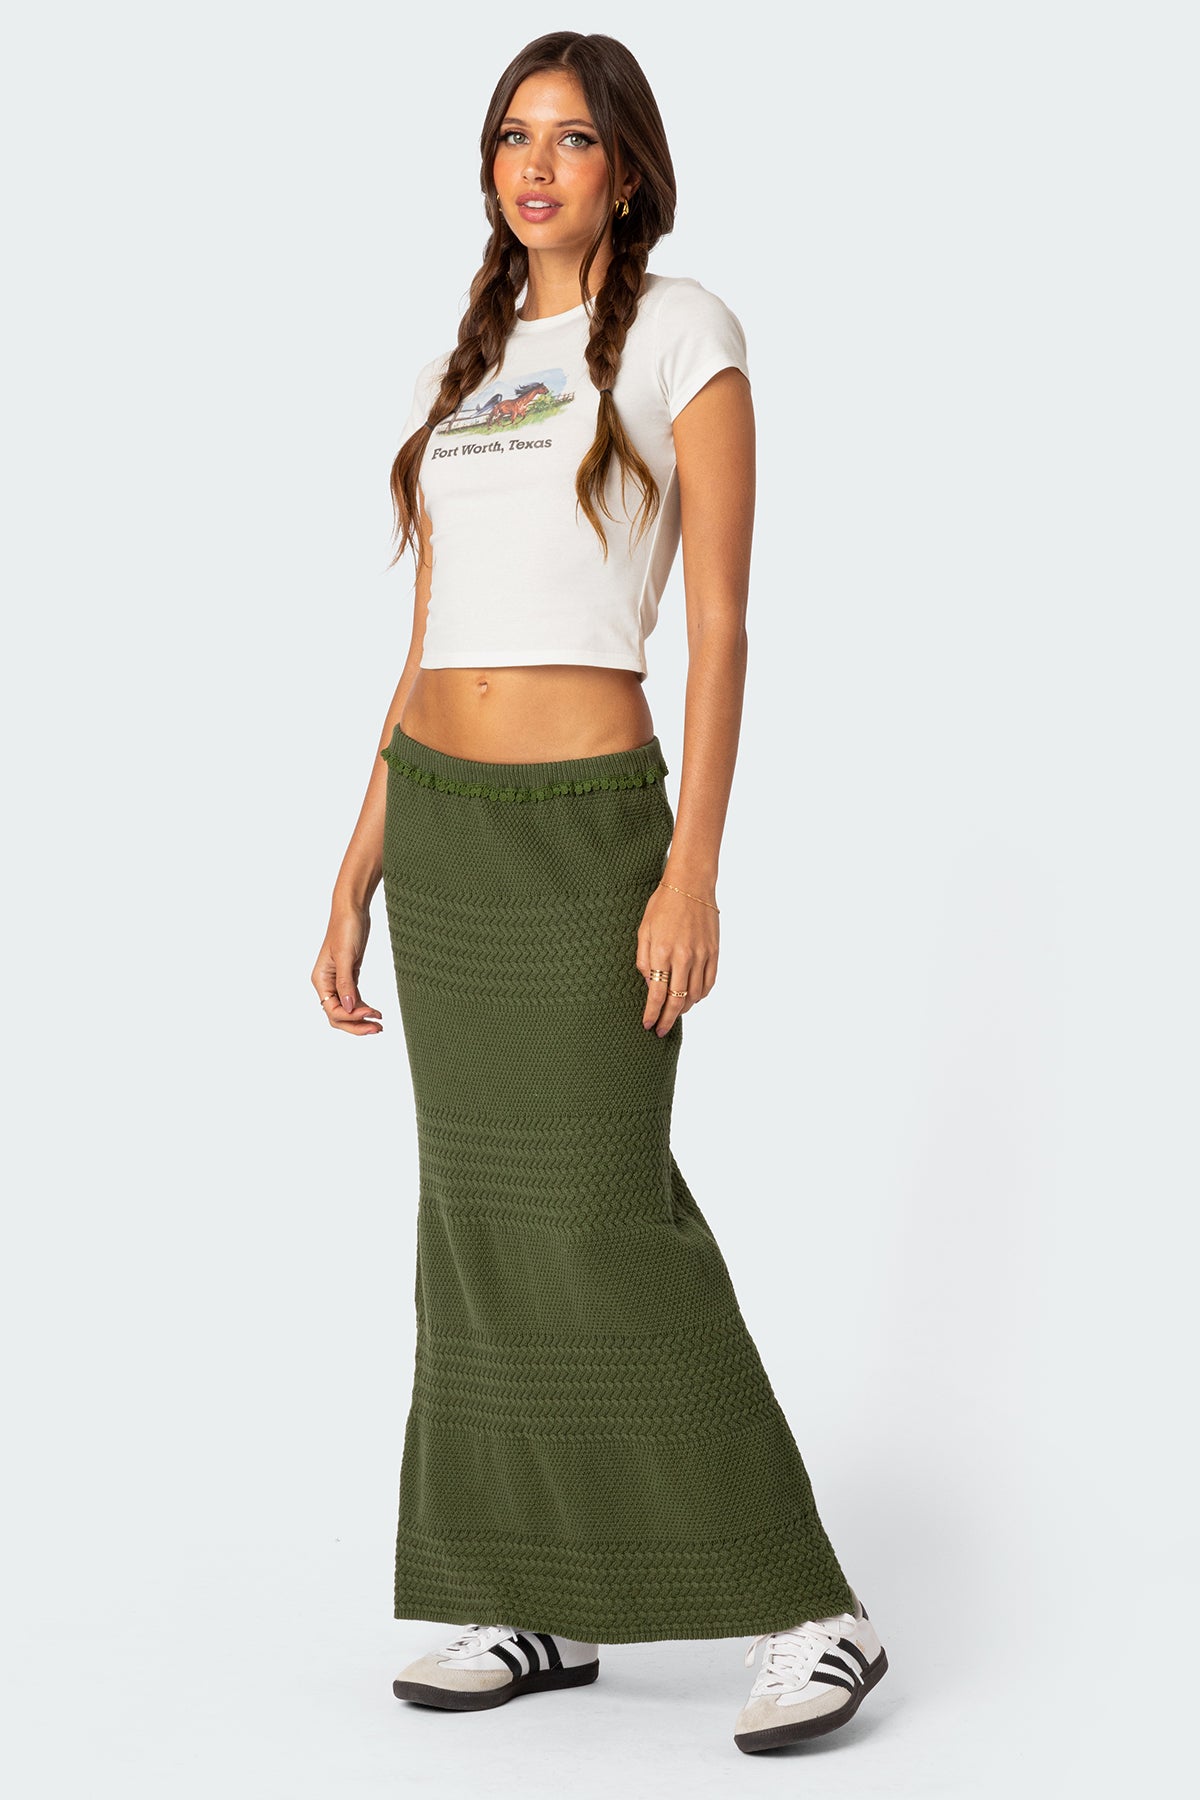 Garner Textured Knit Maxi Skirt